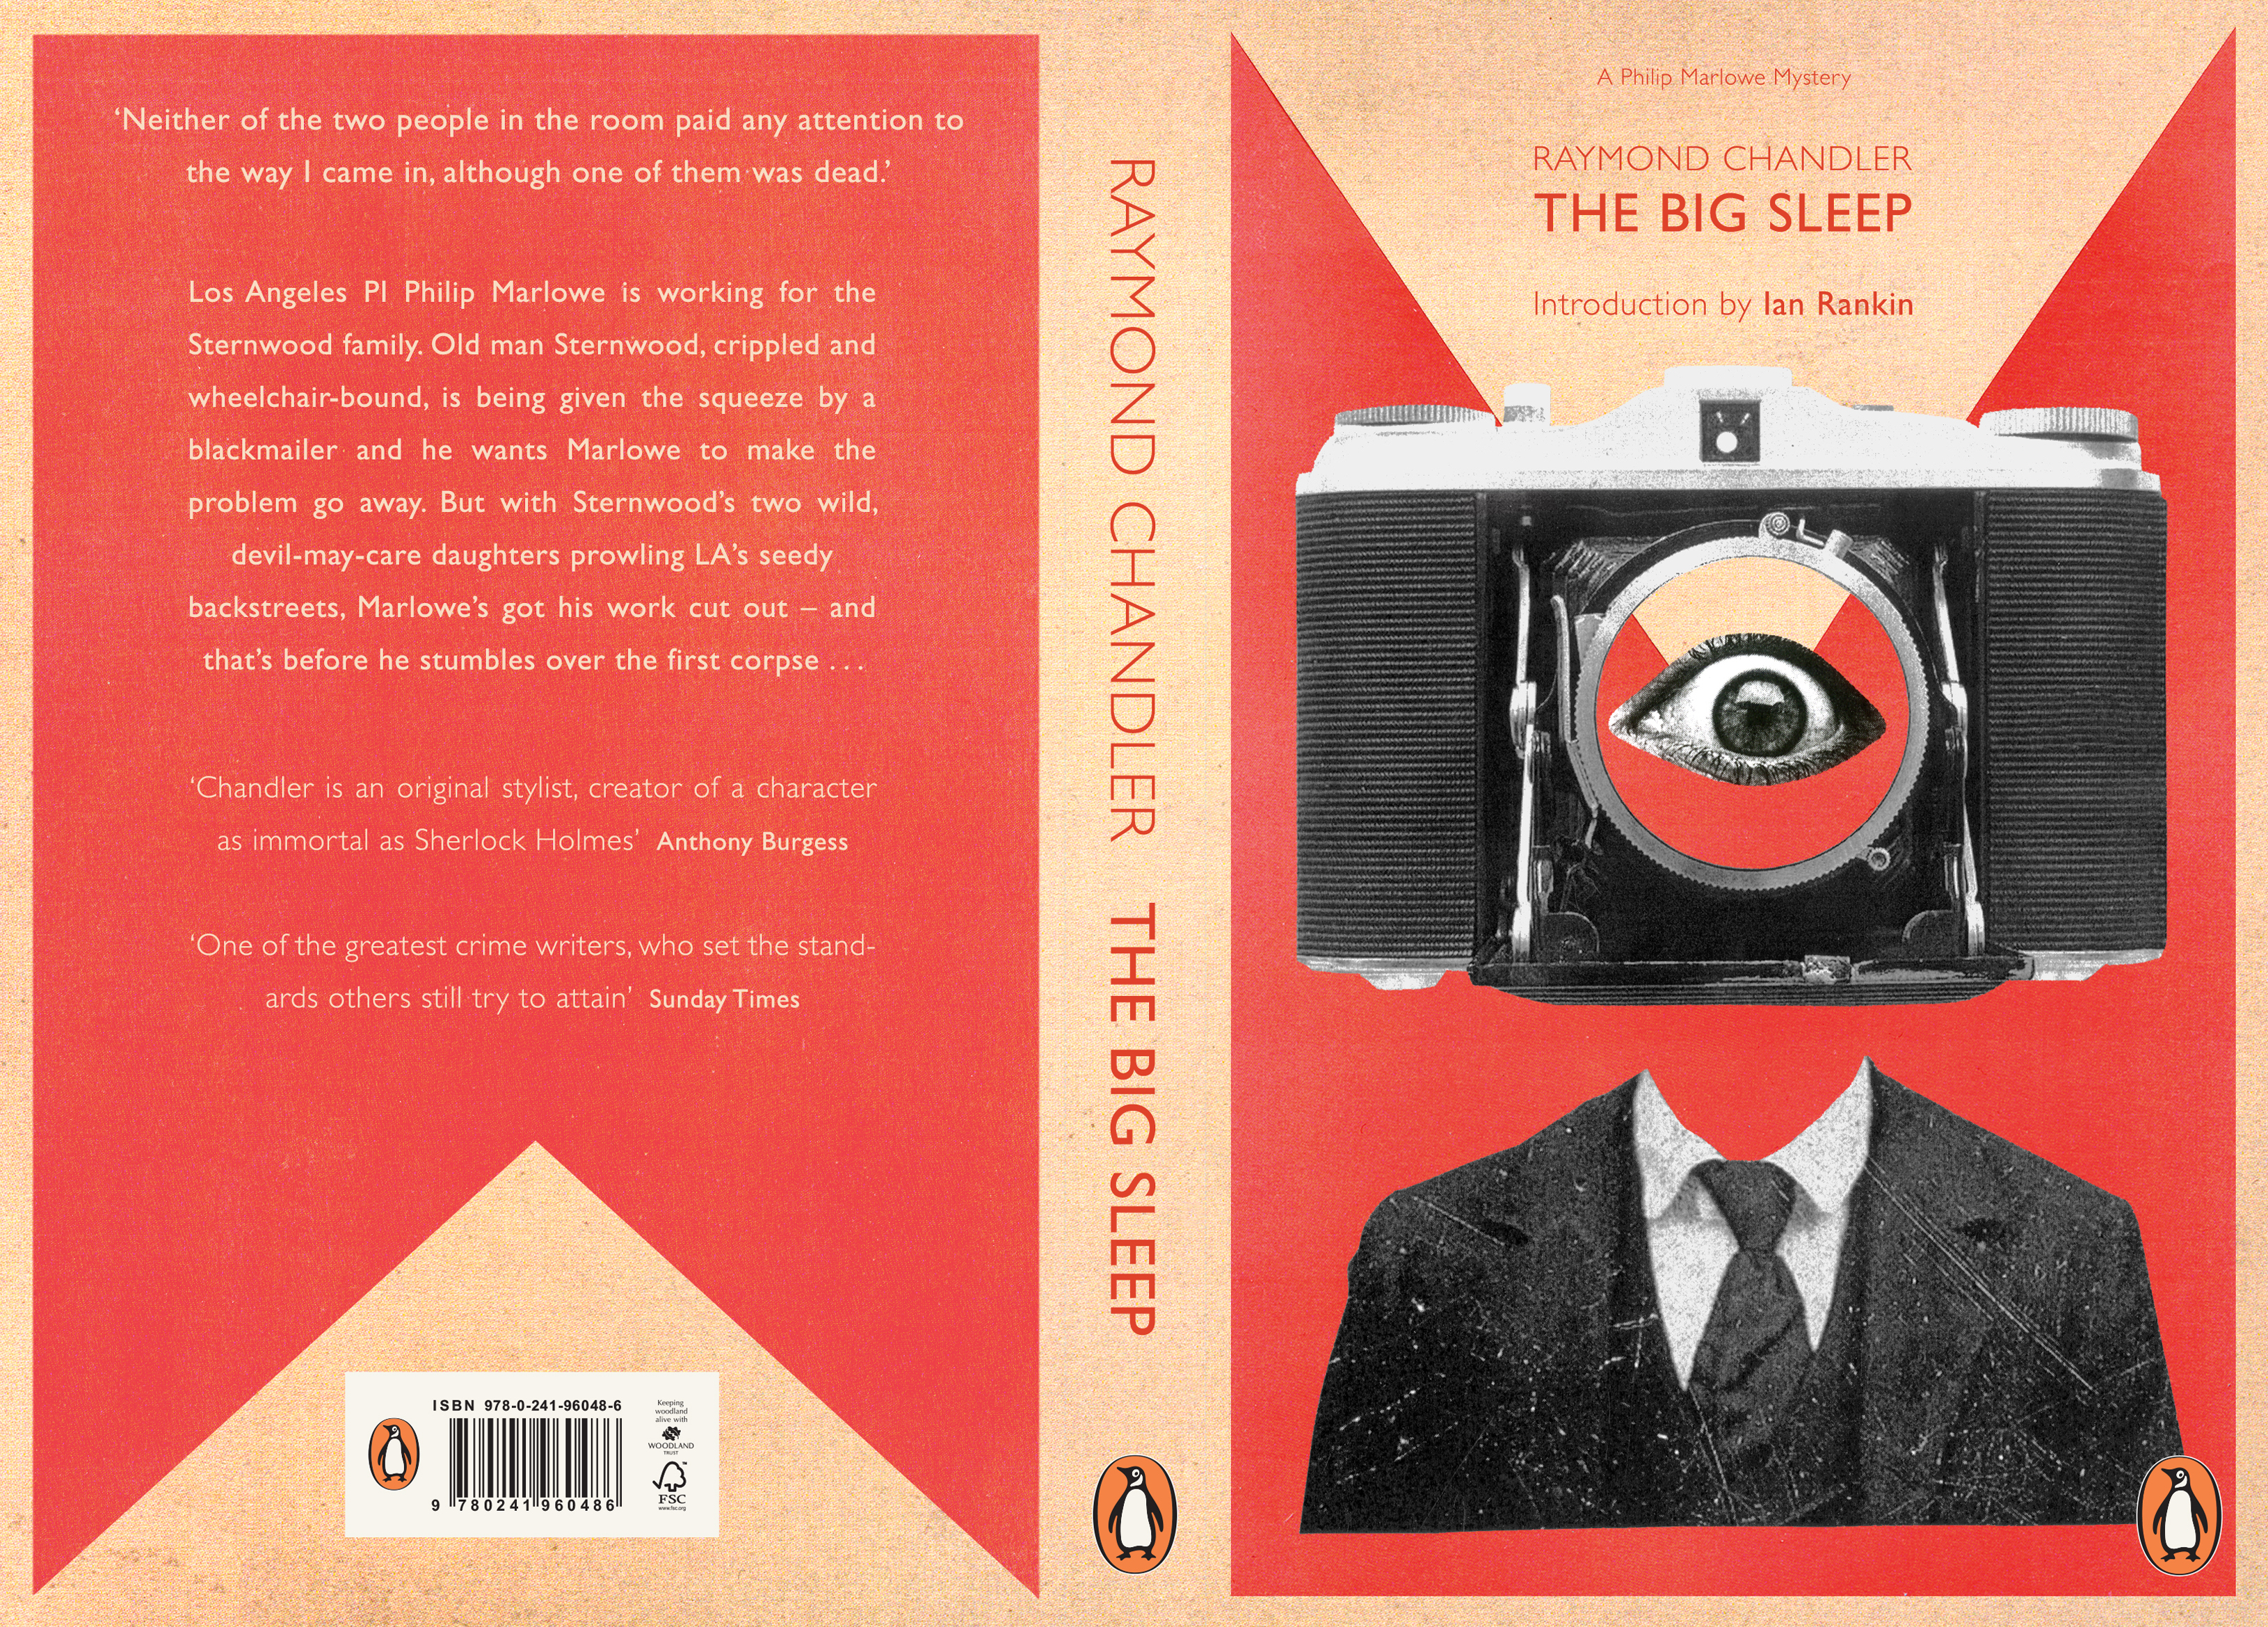 The Big Sleep book cover design